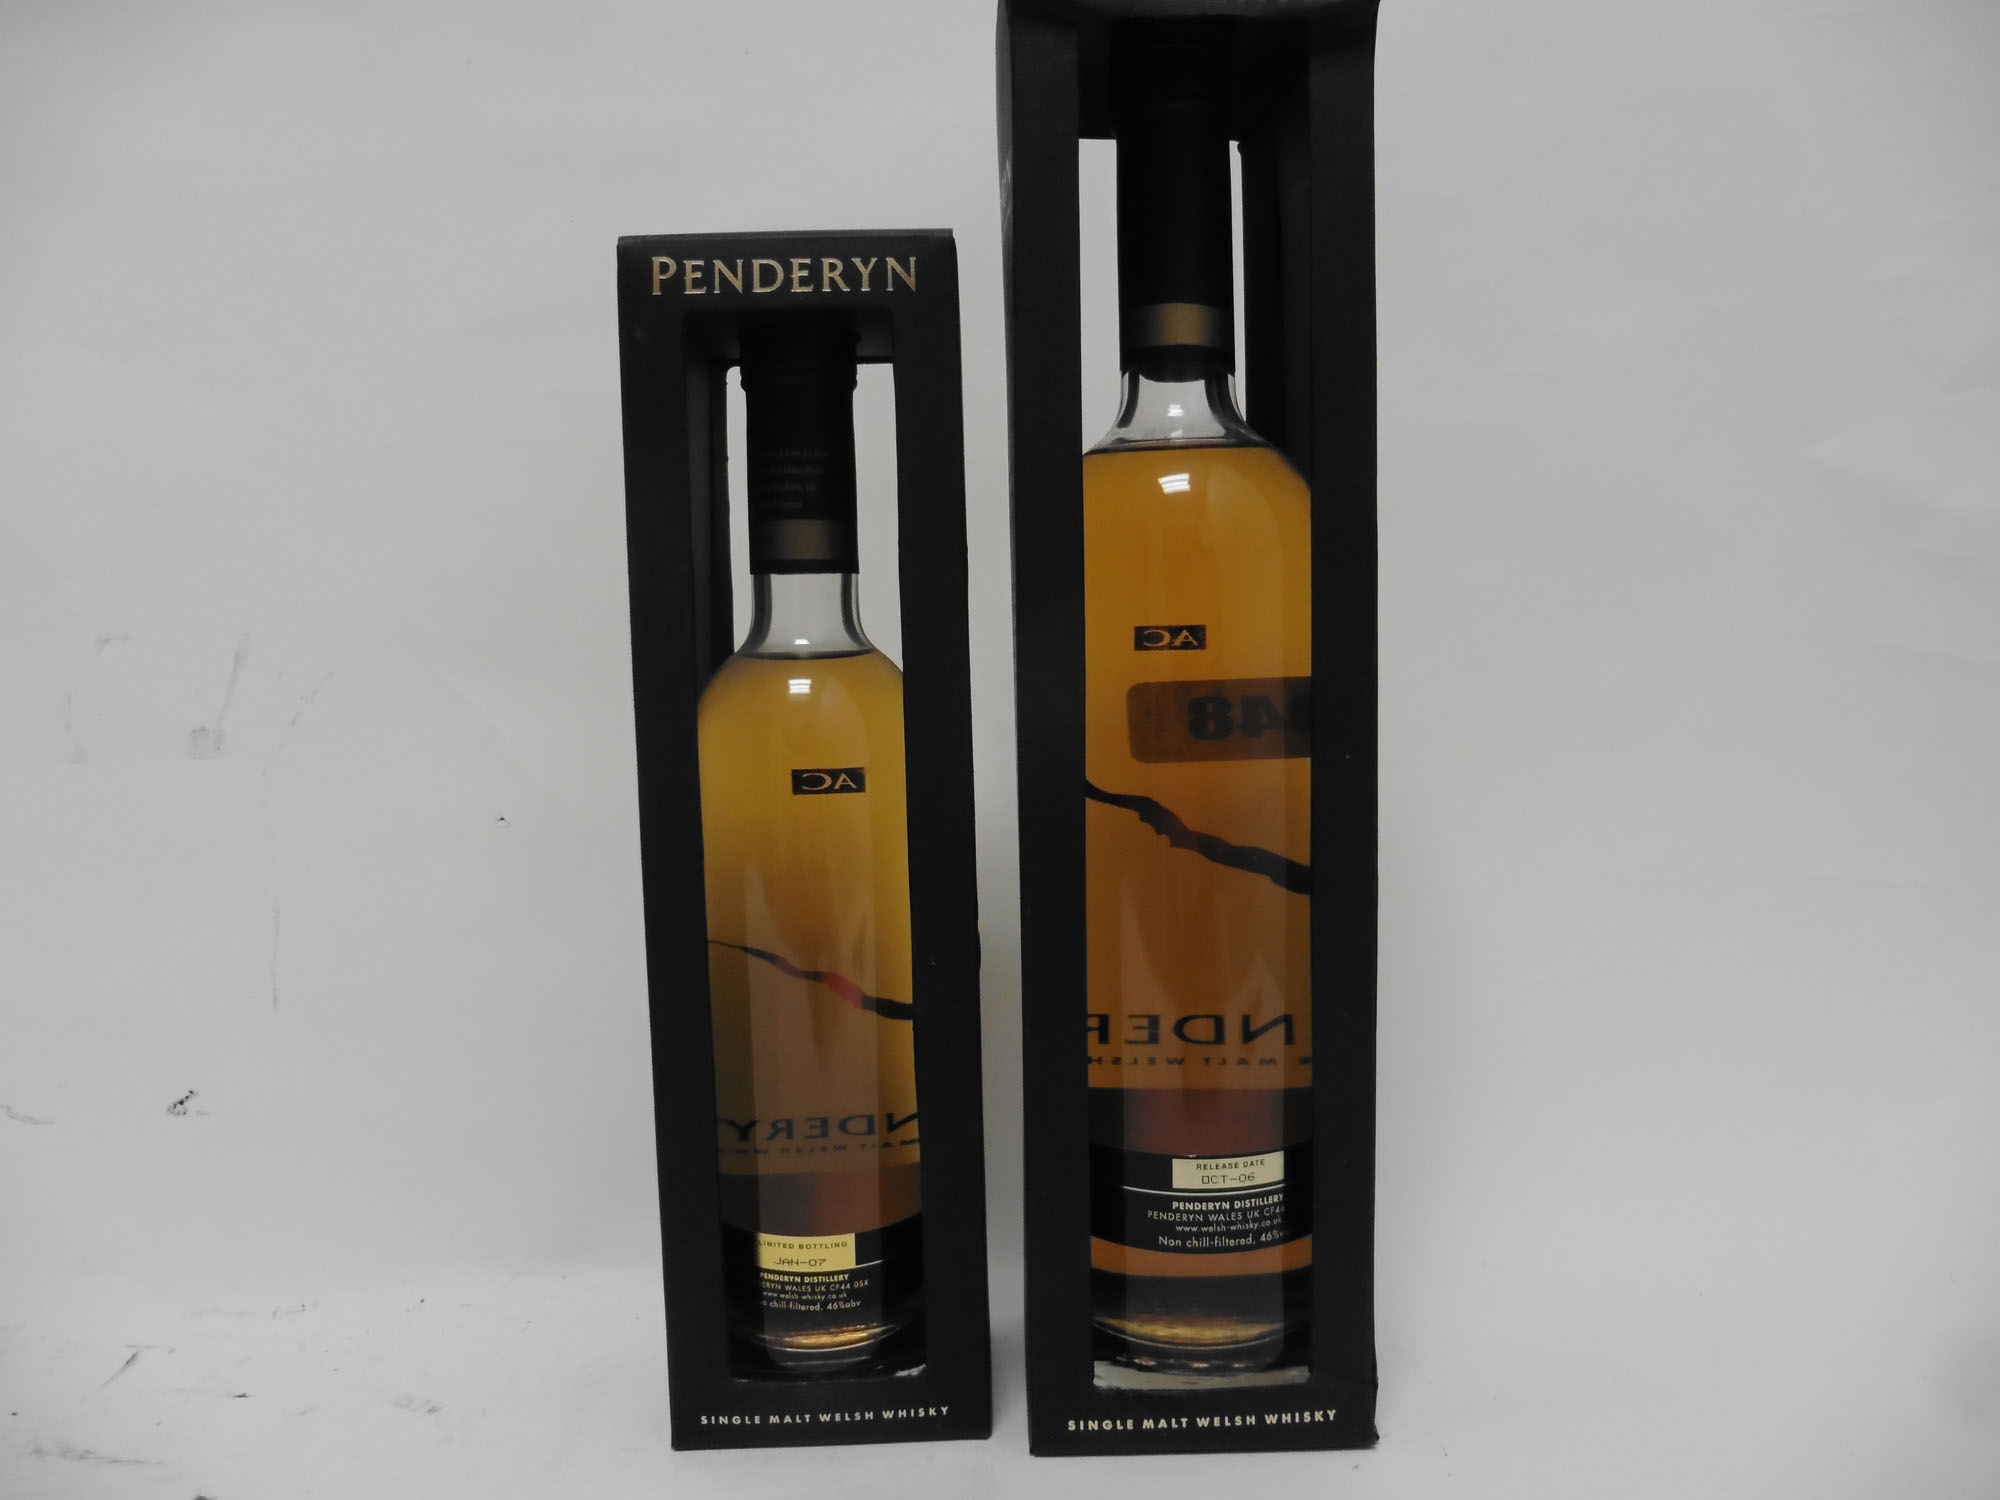 2 bottles of Penderyn Aur Cymru AC Madeira Finished Single Malt Welsh Whisky with boxes, - Image 2 of 2